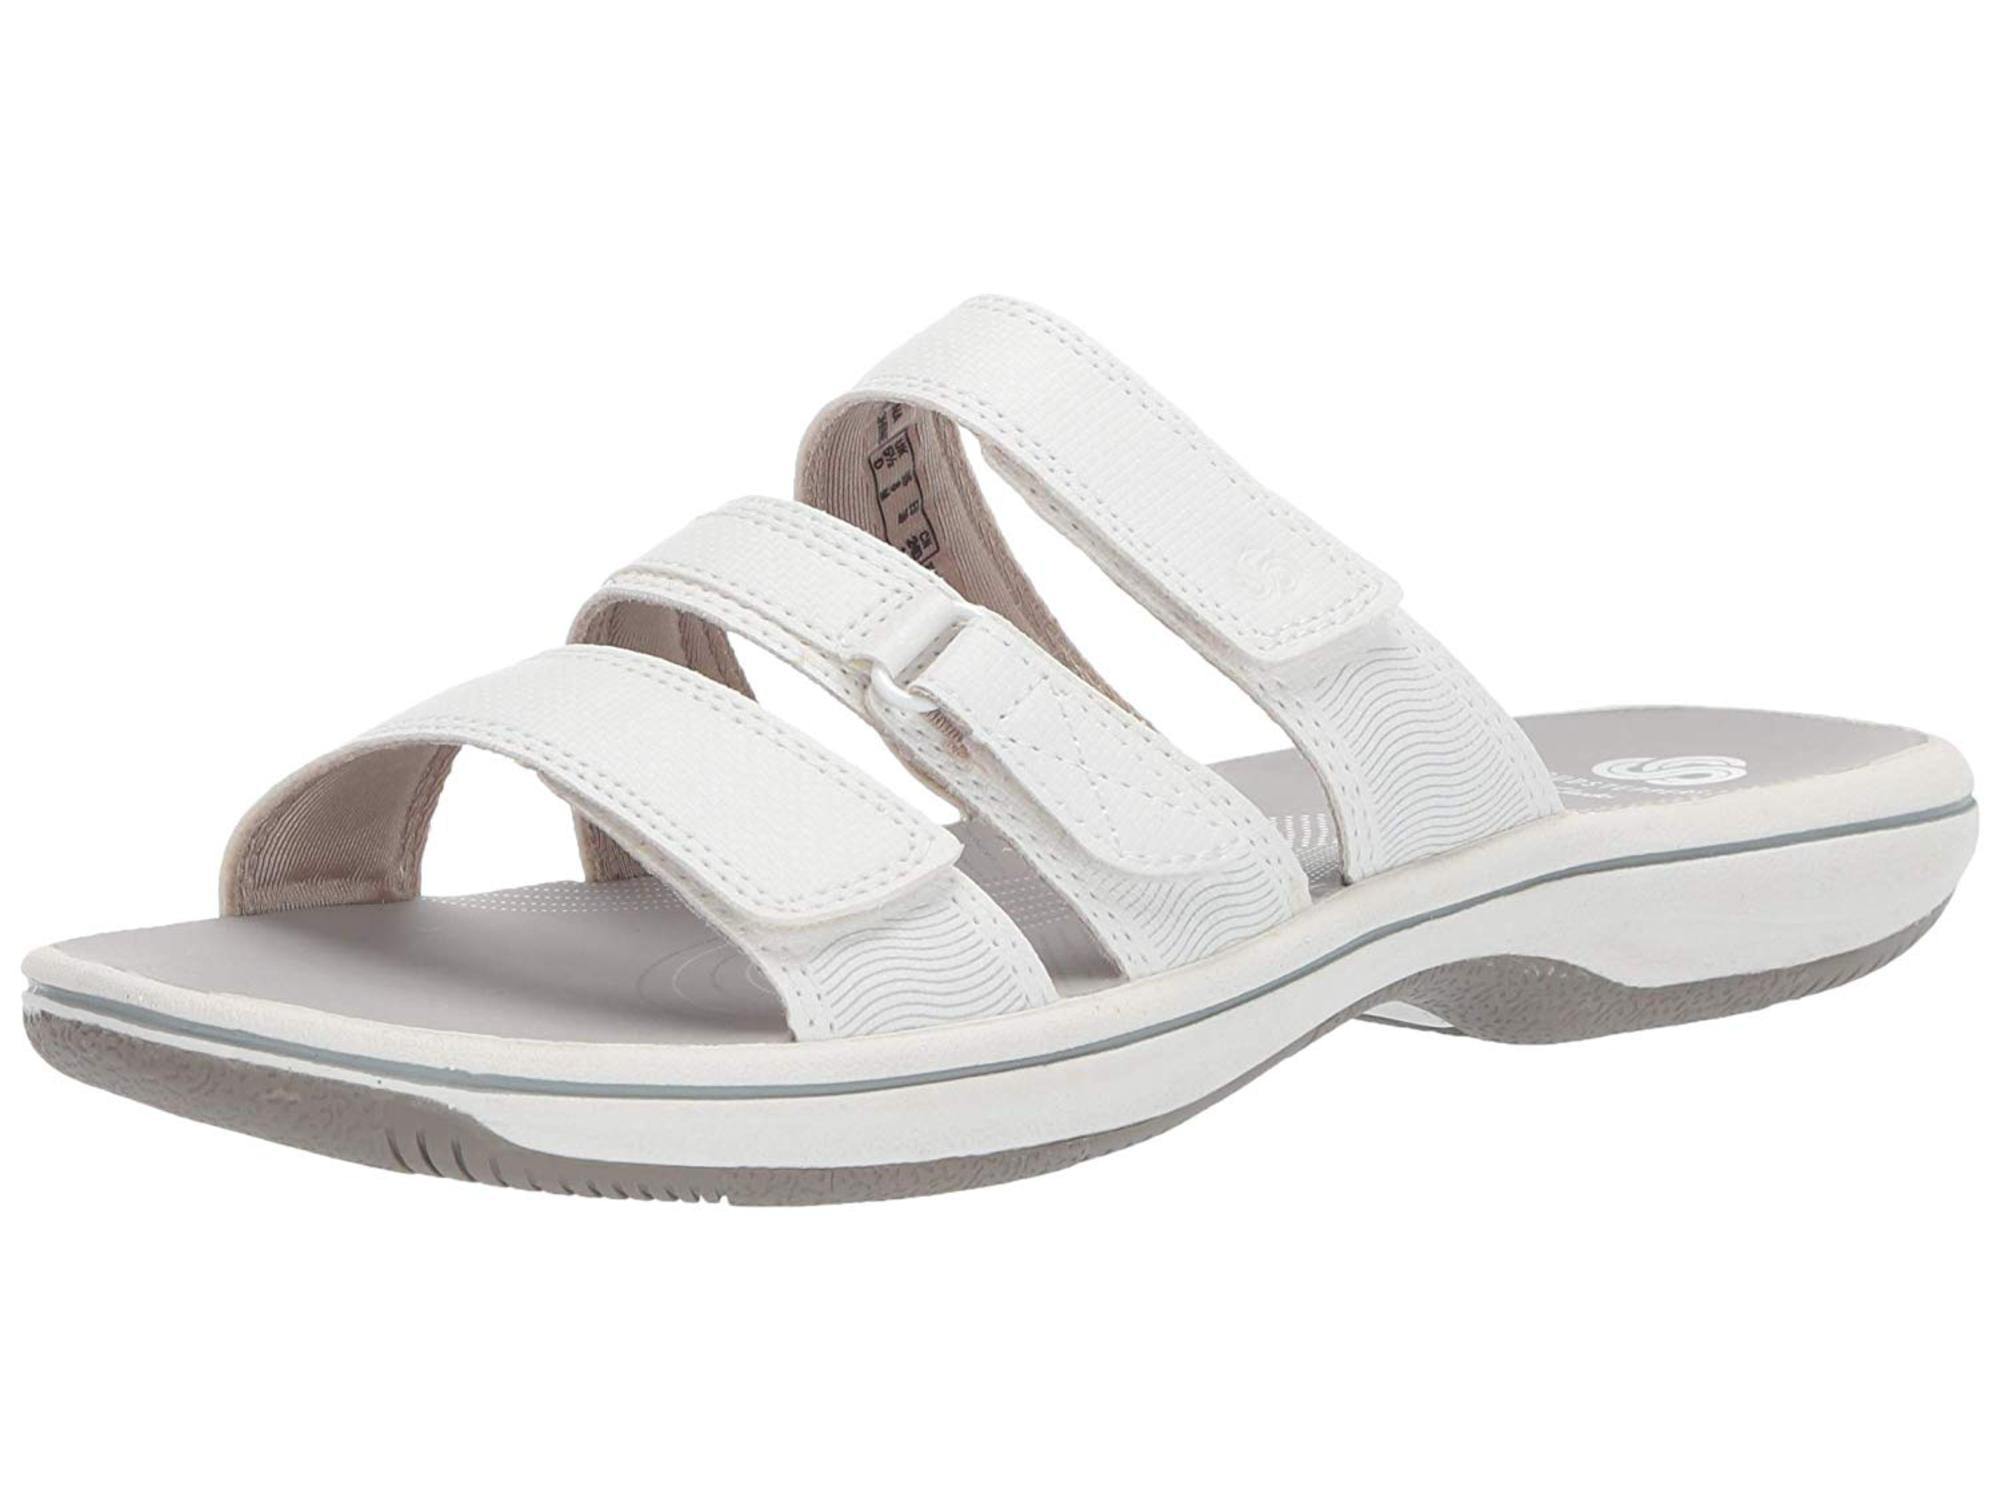 clarks women's brinkley coast slide sandal